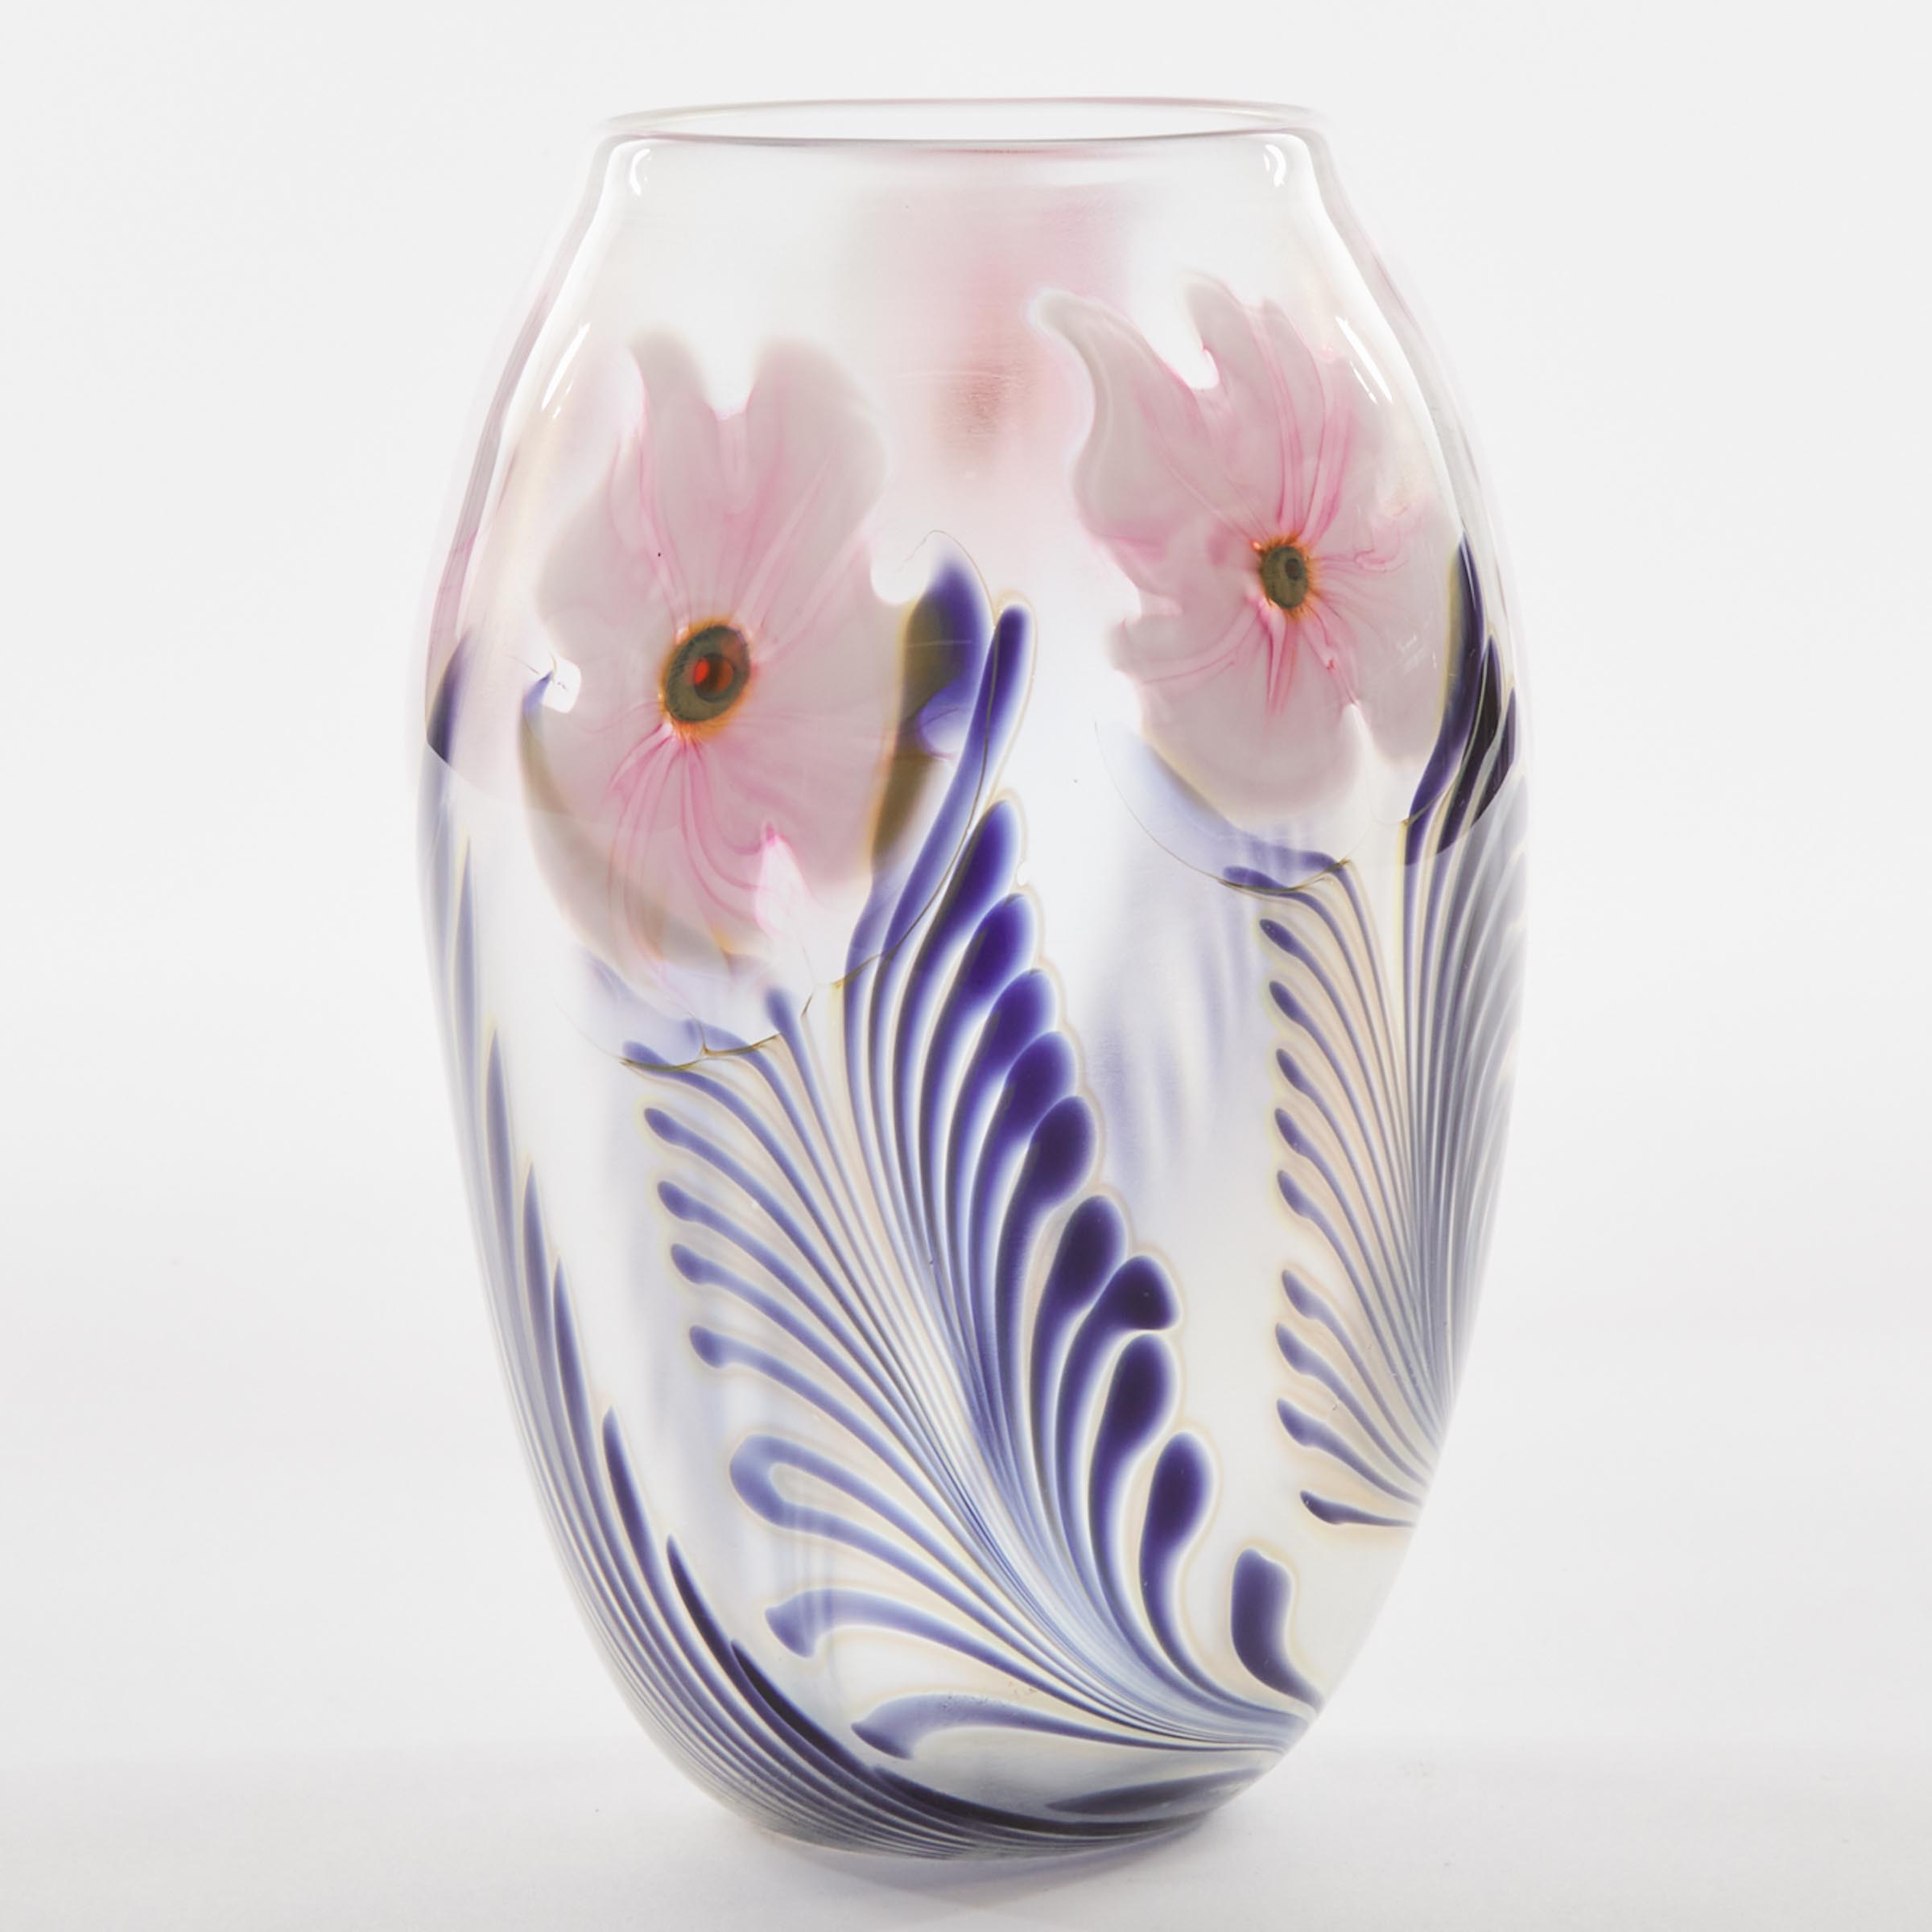 Charles Lotton (American, 1935-2021), 'Multi-Flora' Glass Vase, 1983